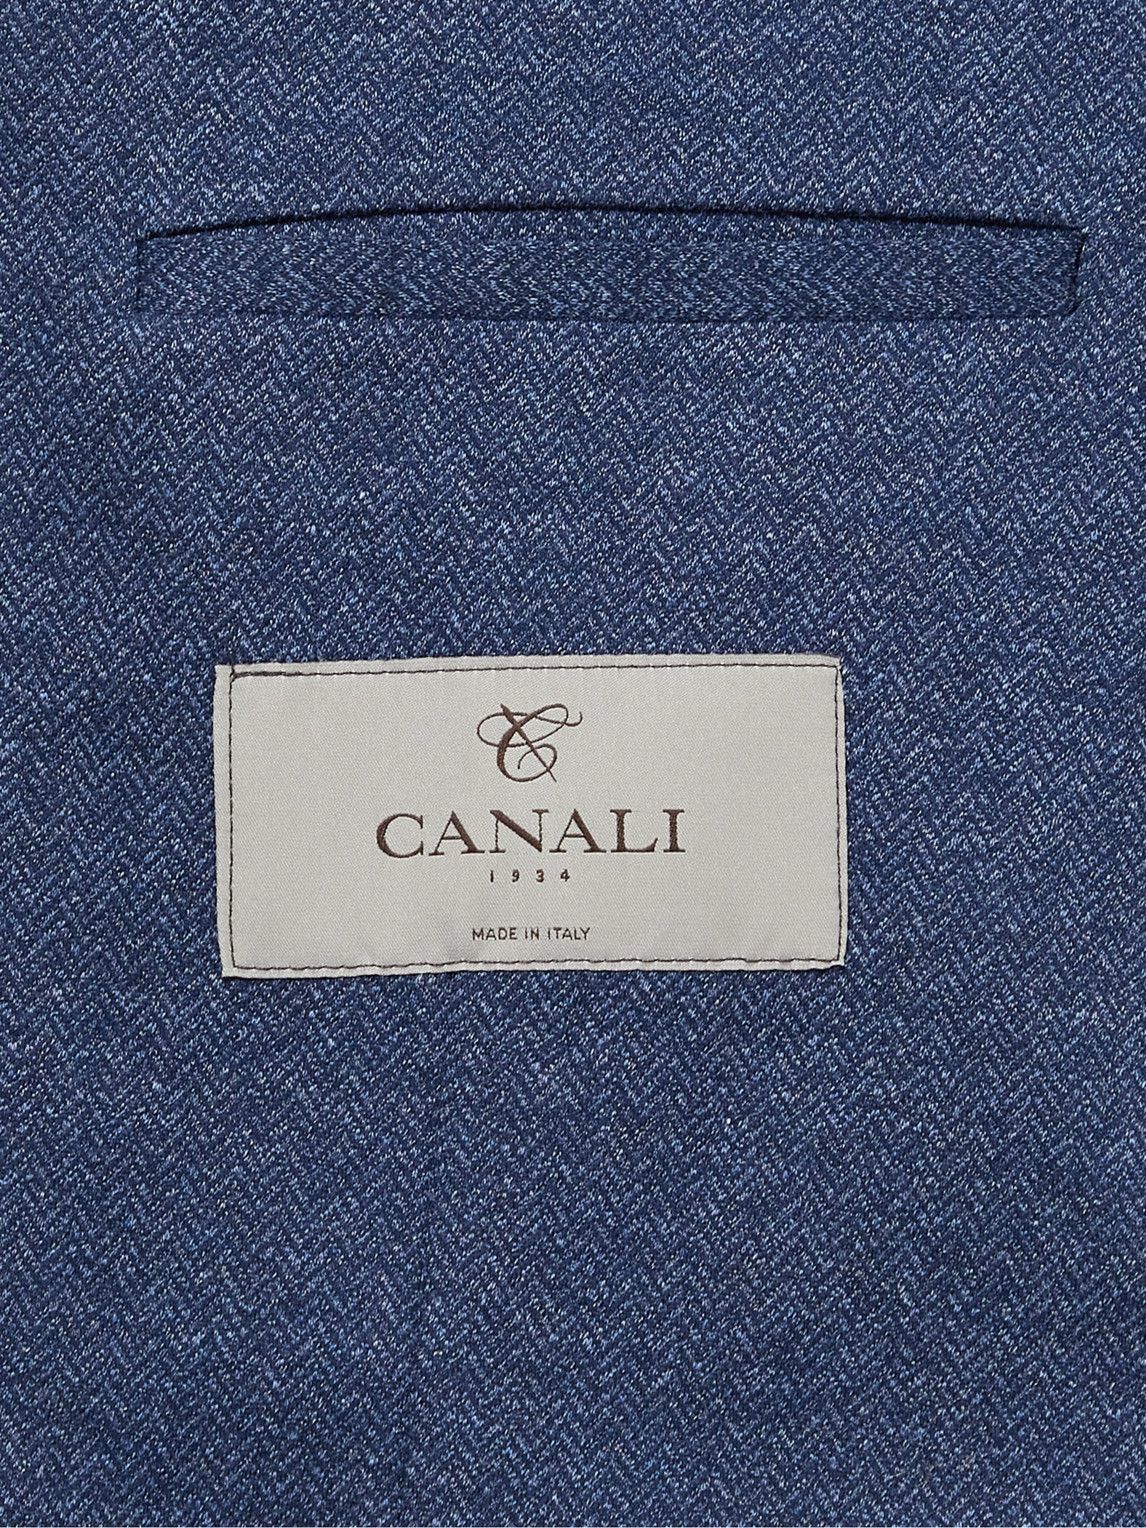 Canali - Unstructured Herringbone Cotton-Blend Jersey Blazer - Blue Canali